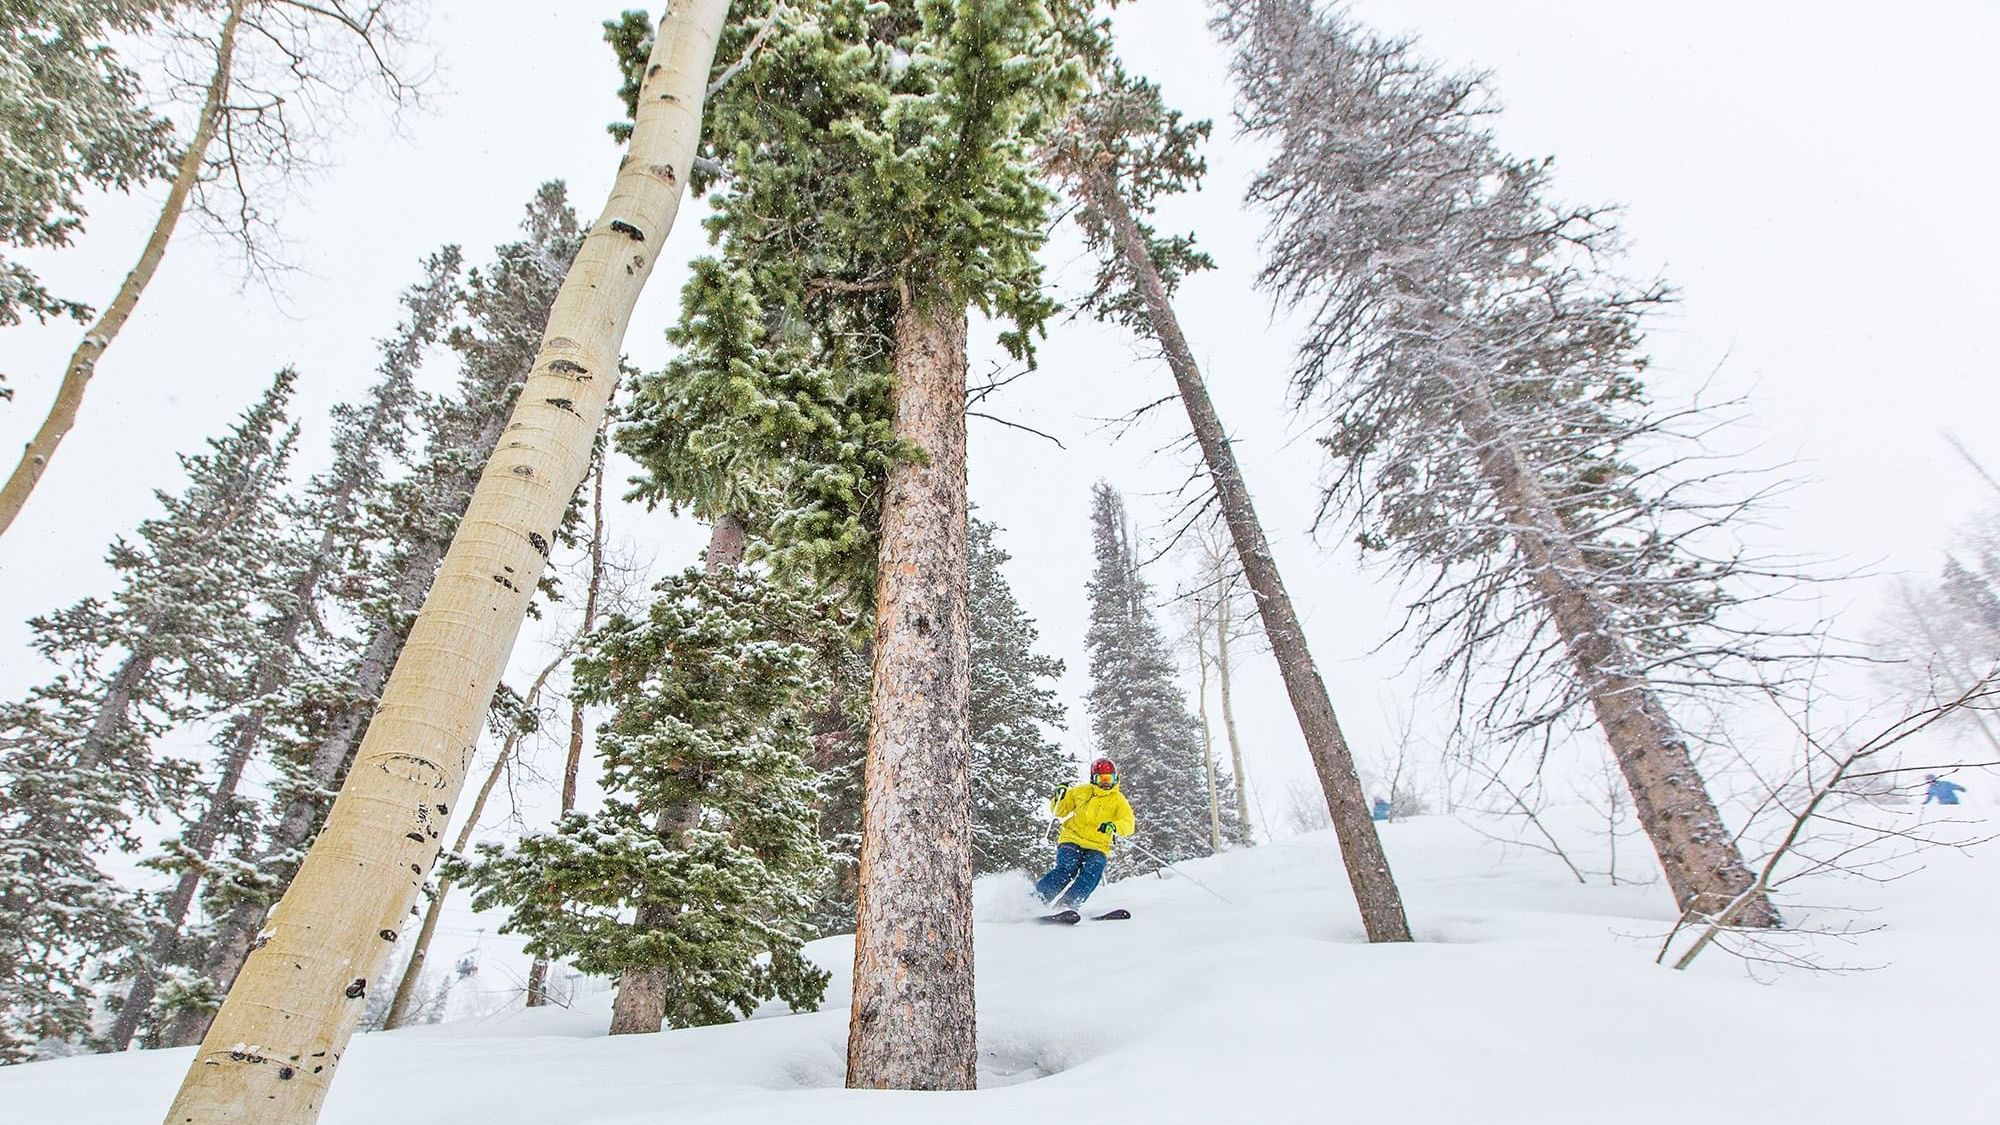 Skier in trees